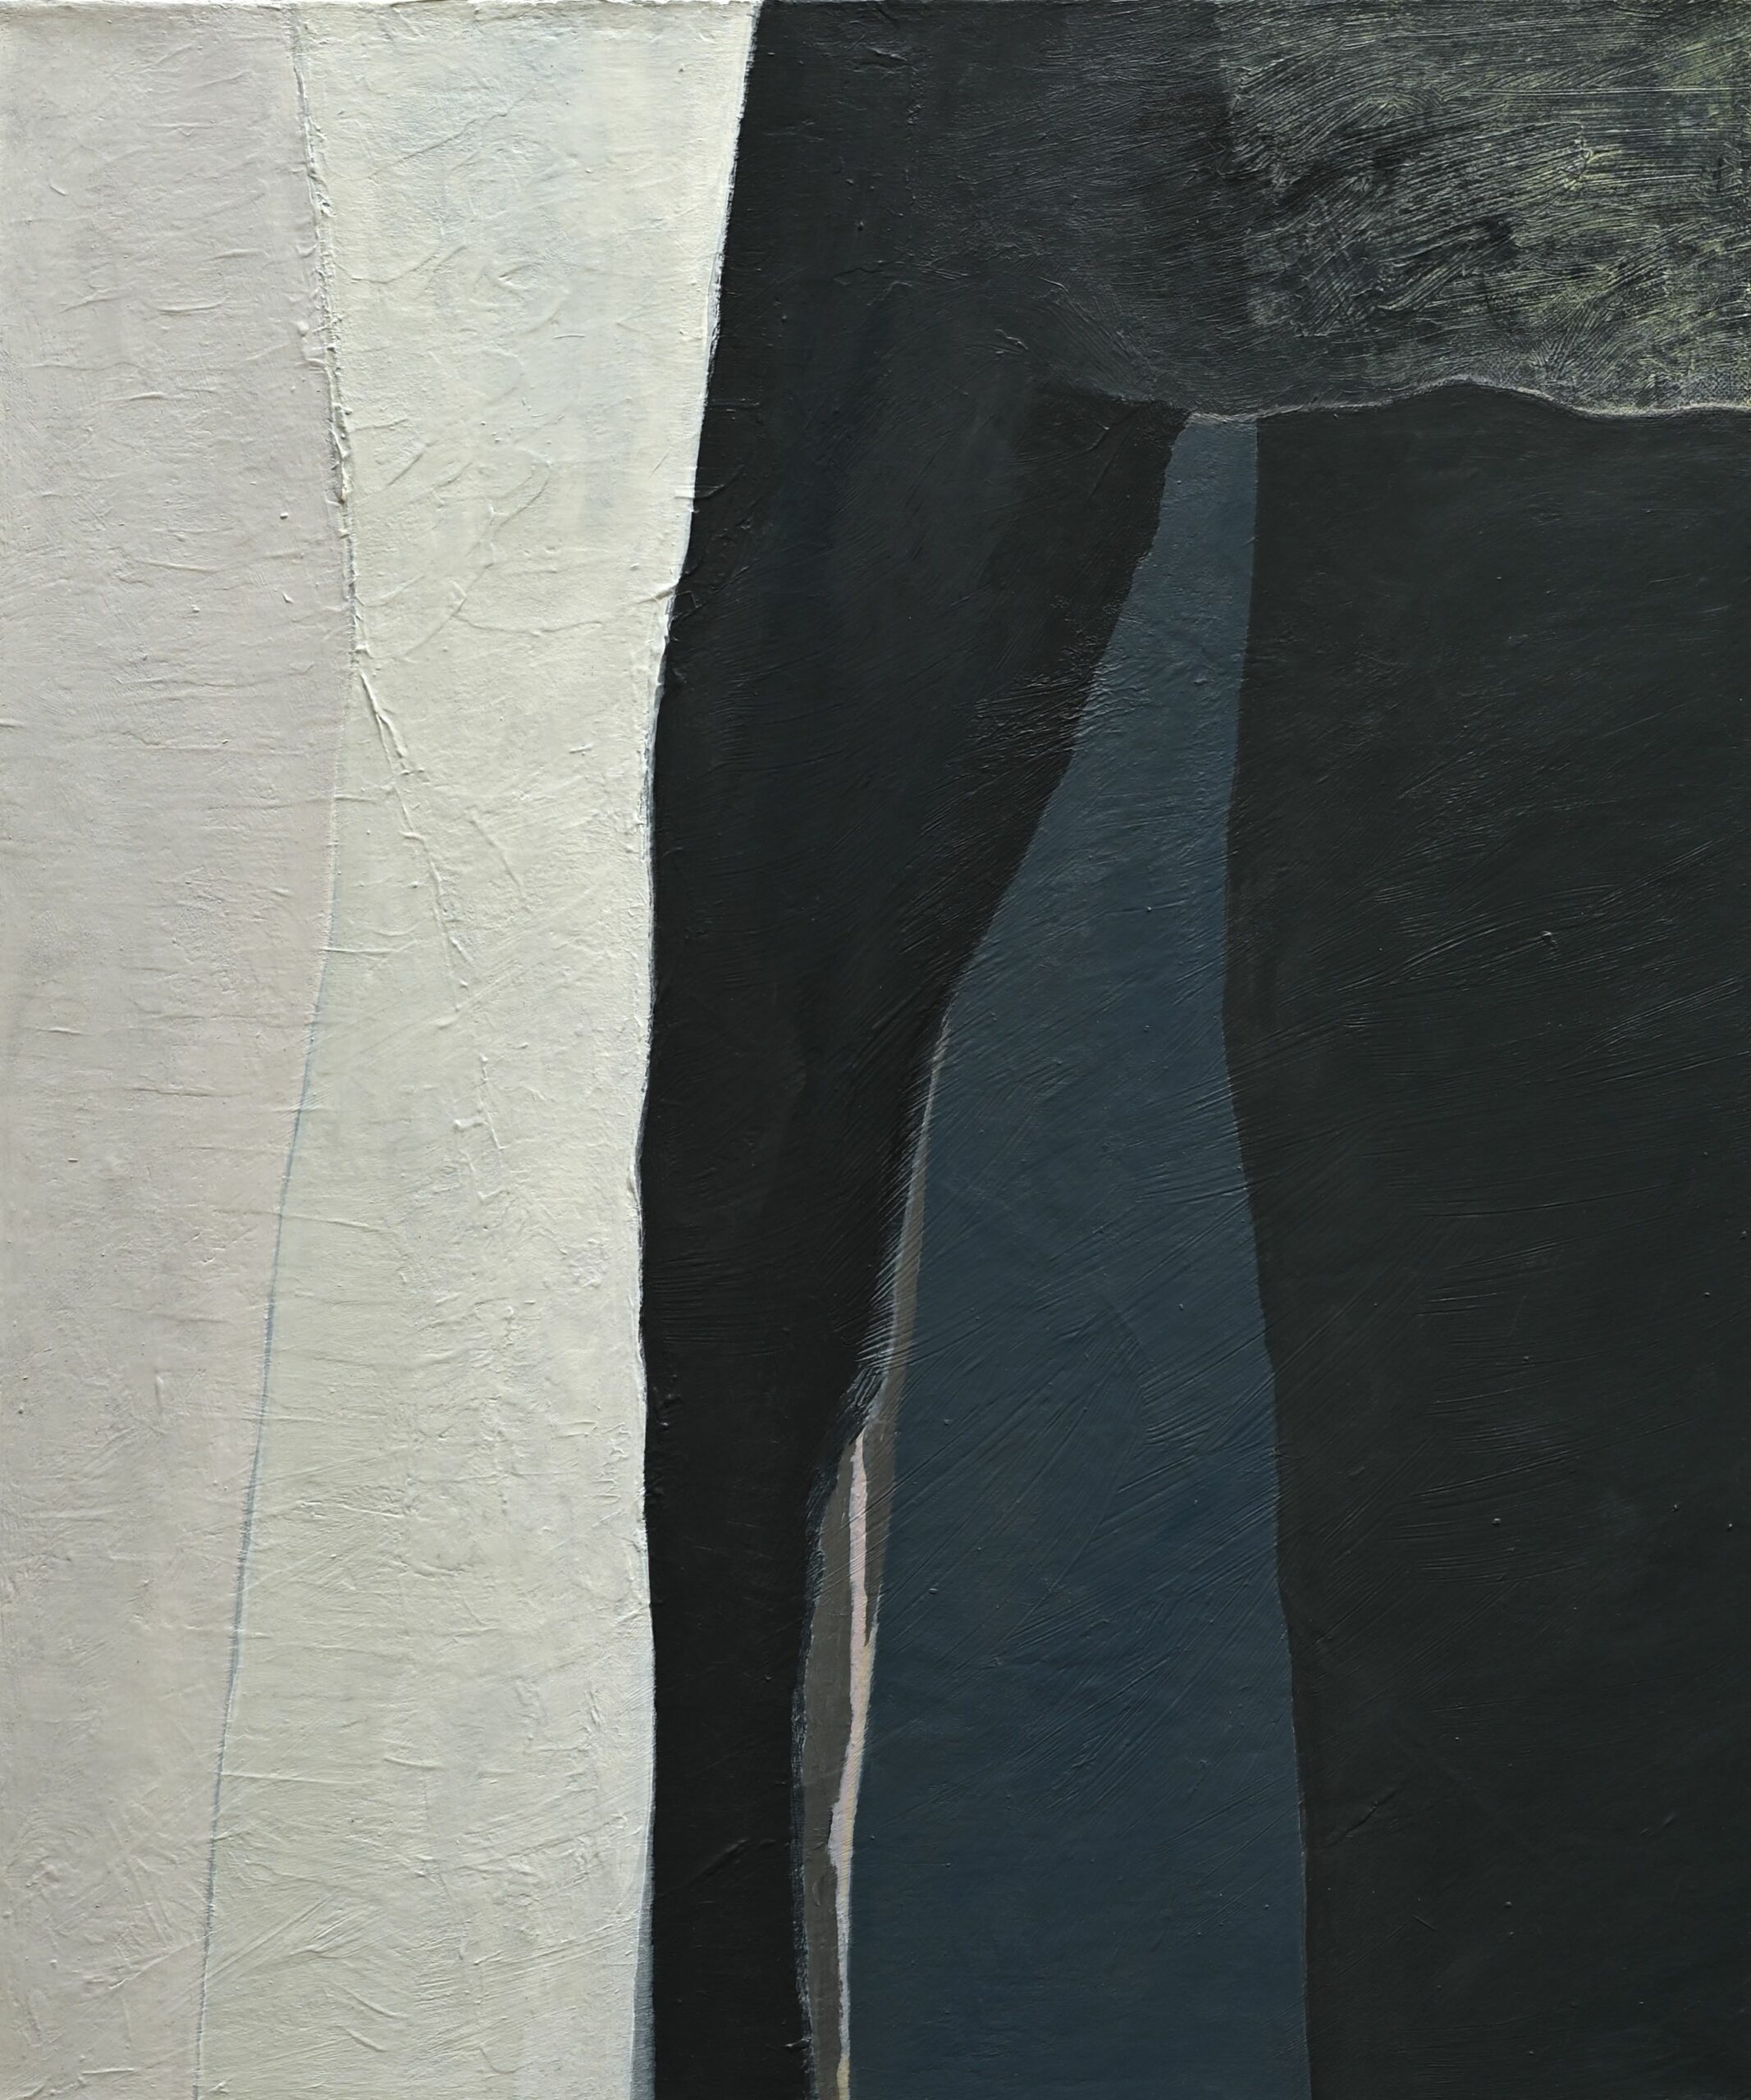 Black vs white,  2019, Acryl auf Leinwand, 50 x 60 cm